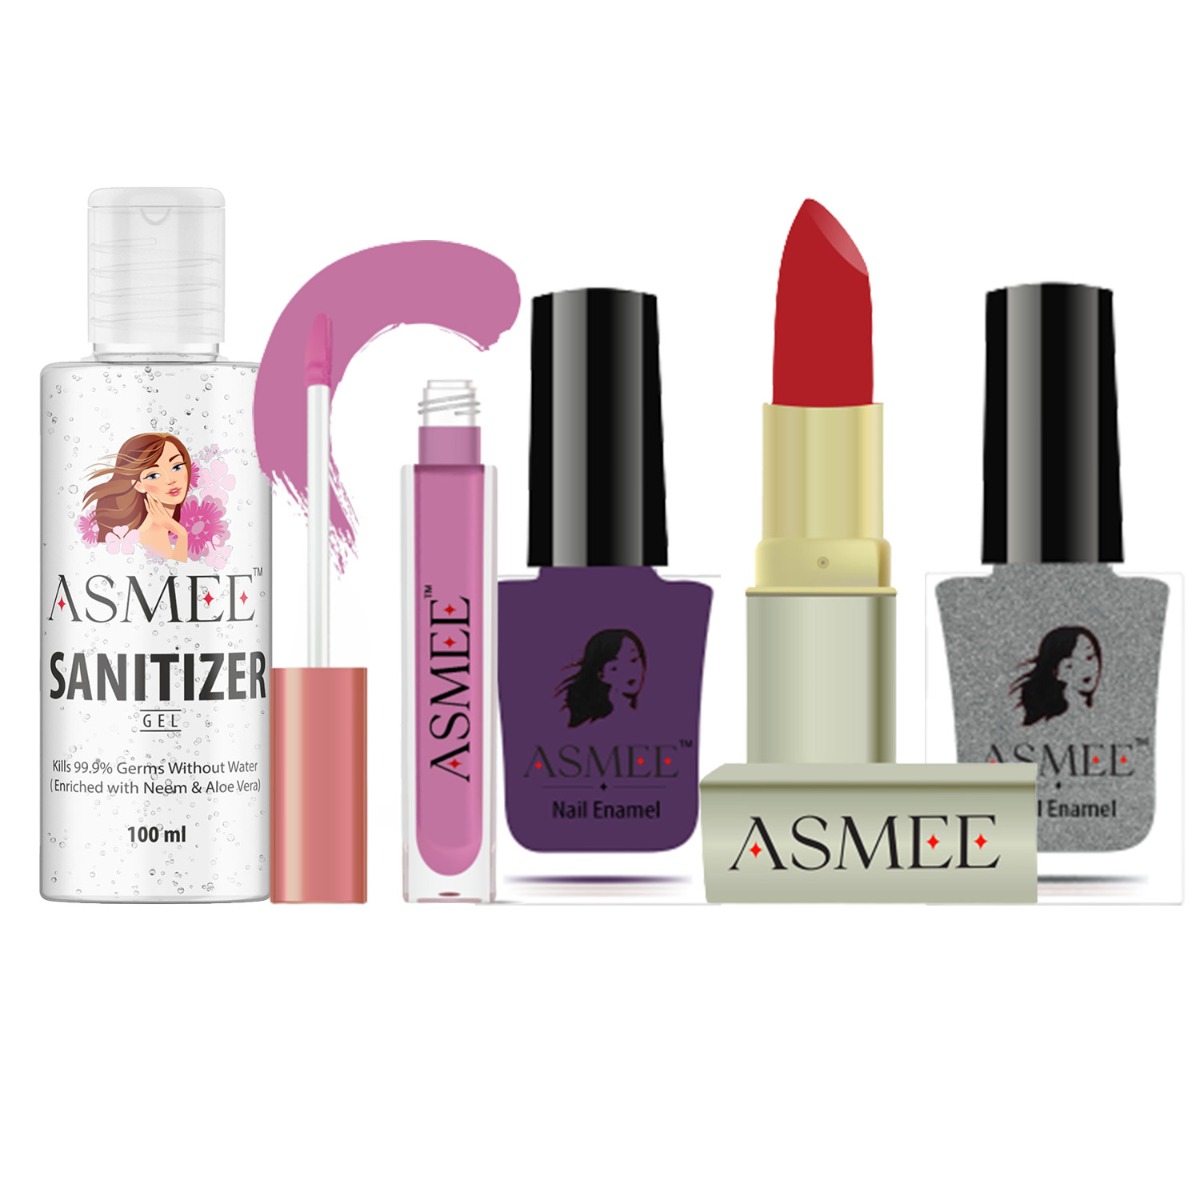 Asmee Cosmetic Hamper - Lipstick + Sanitizer + Nail Polish